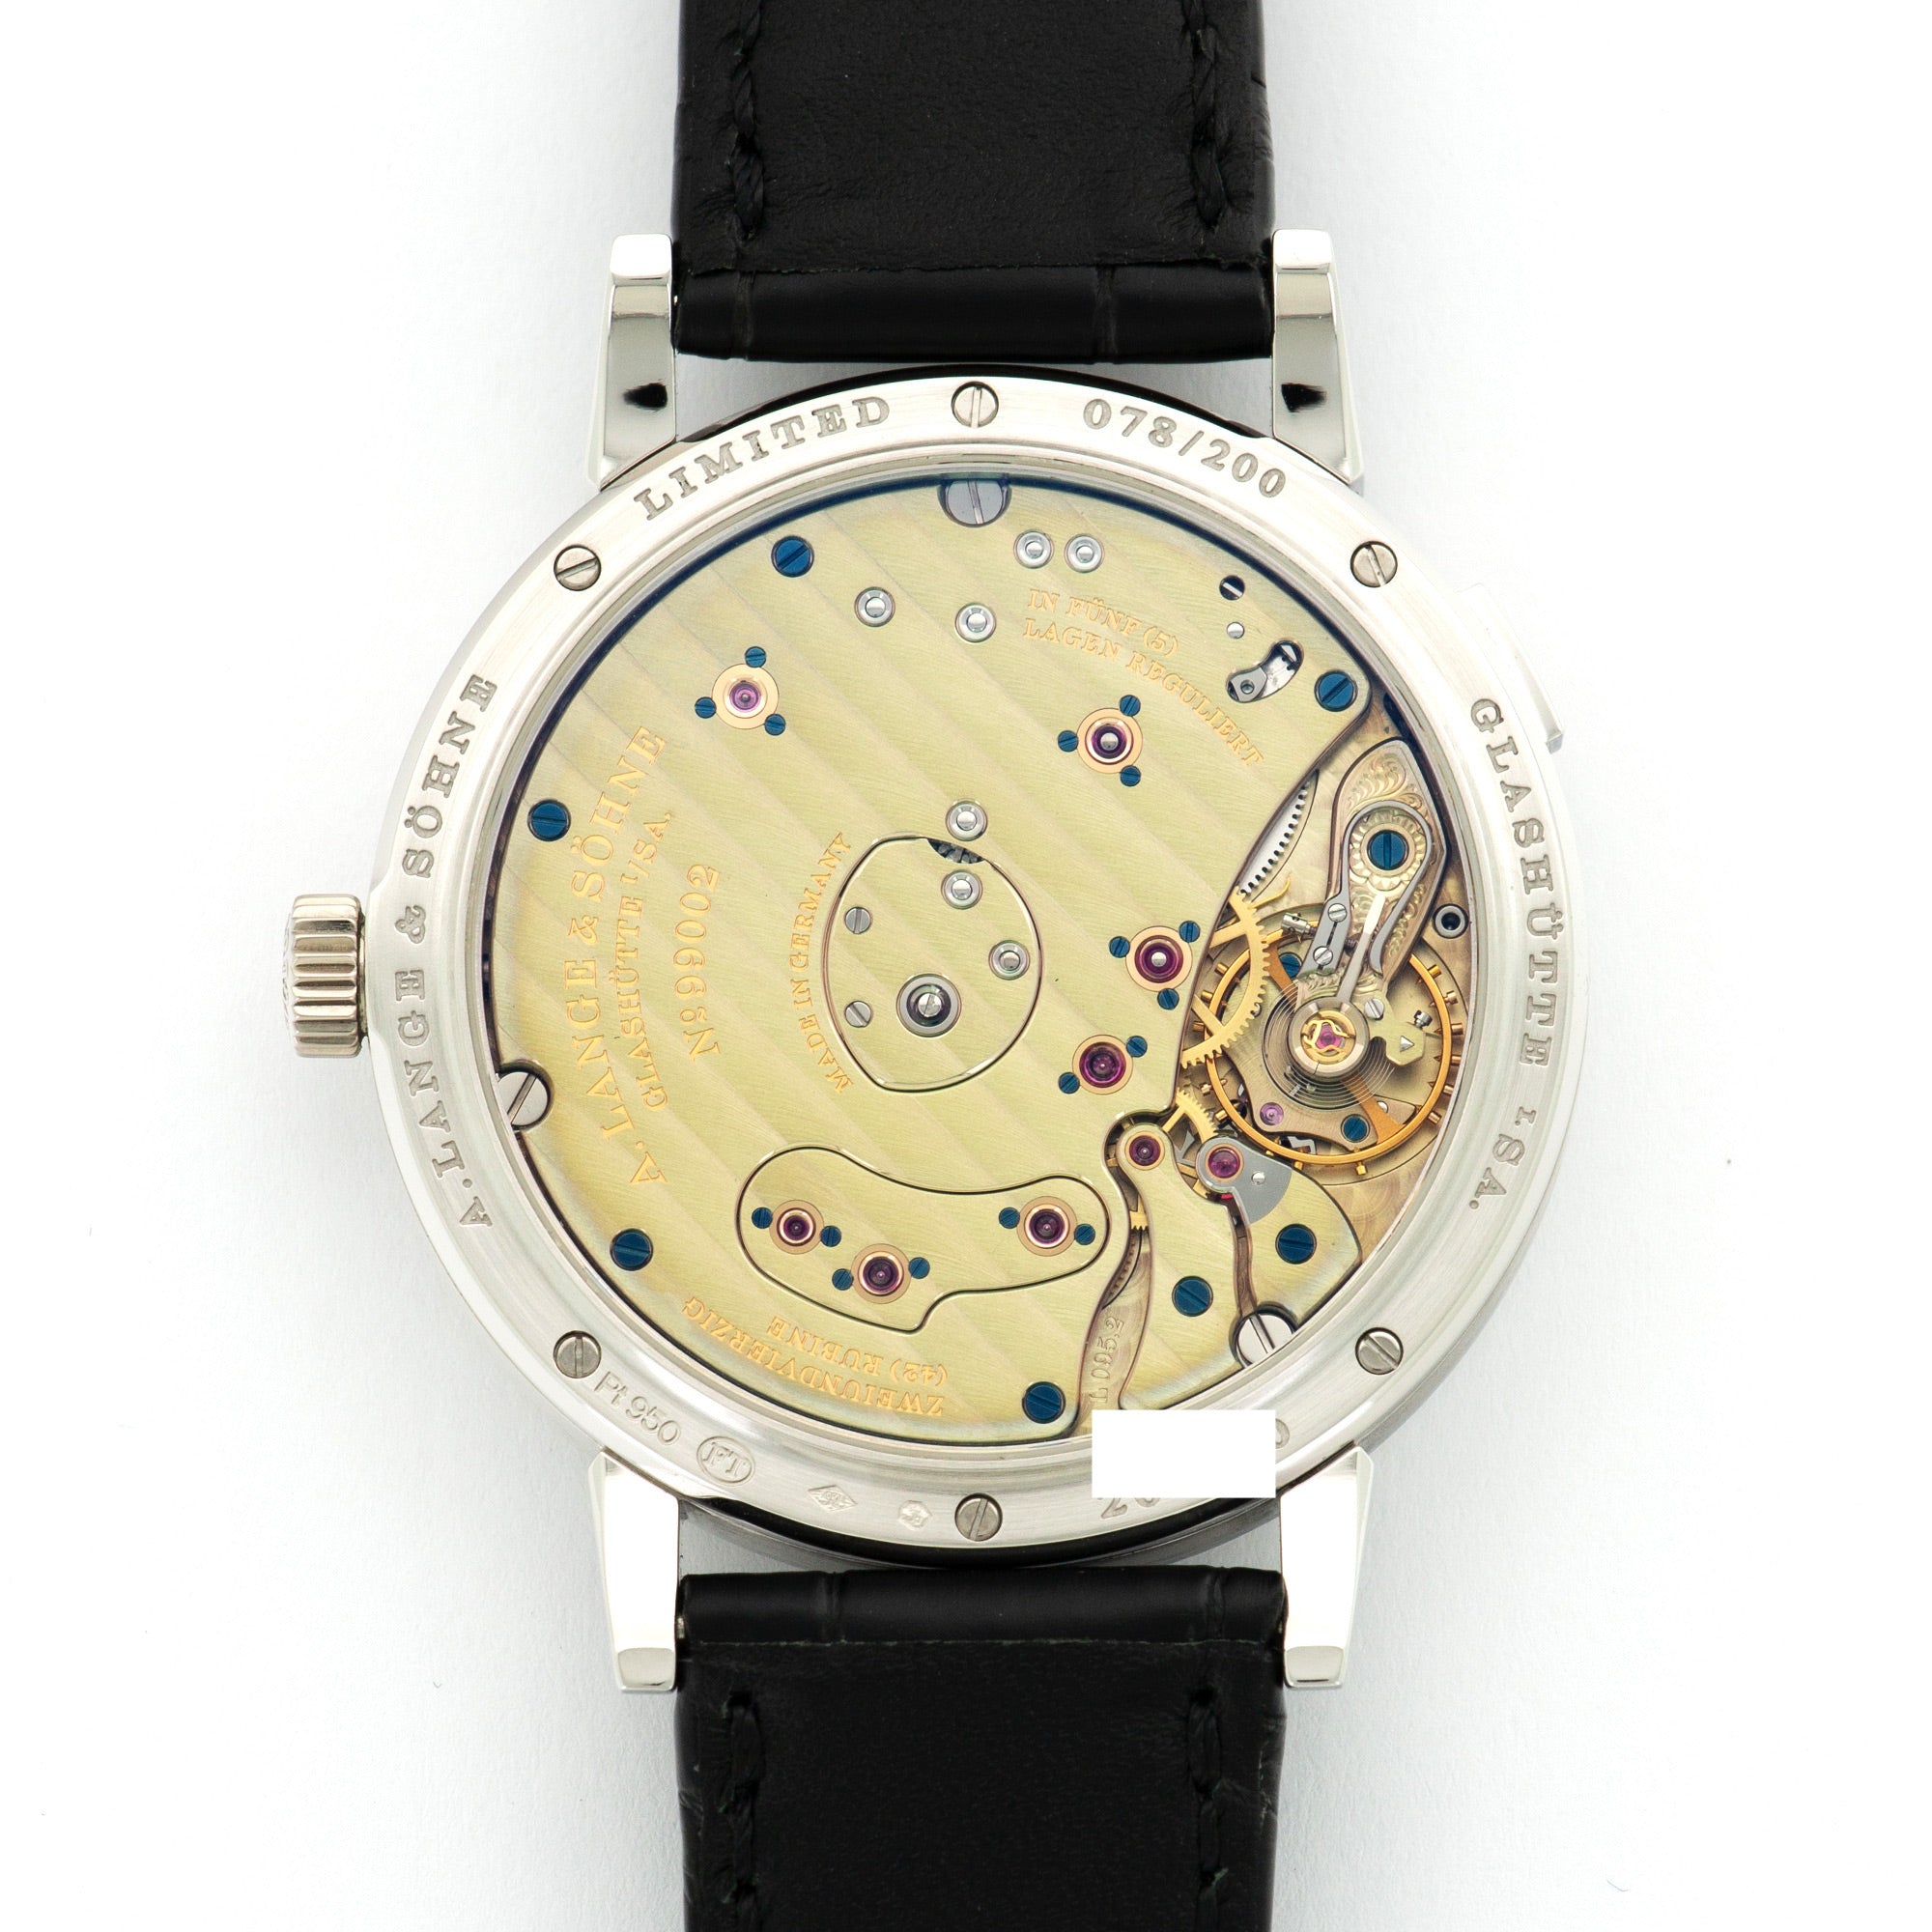 A. Lange &amp; Sohne - A. Lange &amp; Sohne Platinum Grande Lange 1 Lumen Watch Ref. 117.035 - The Keystone Watches